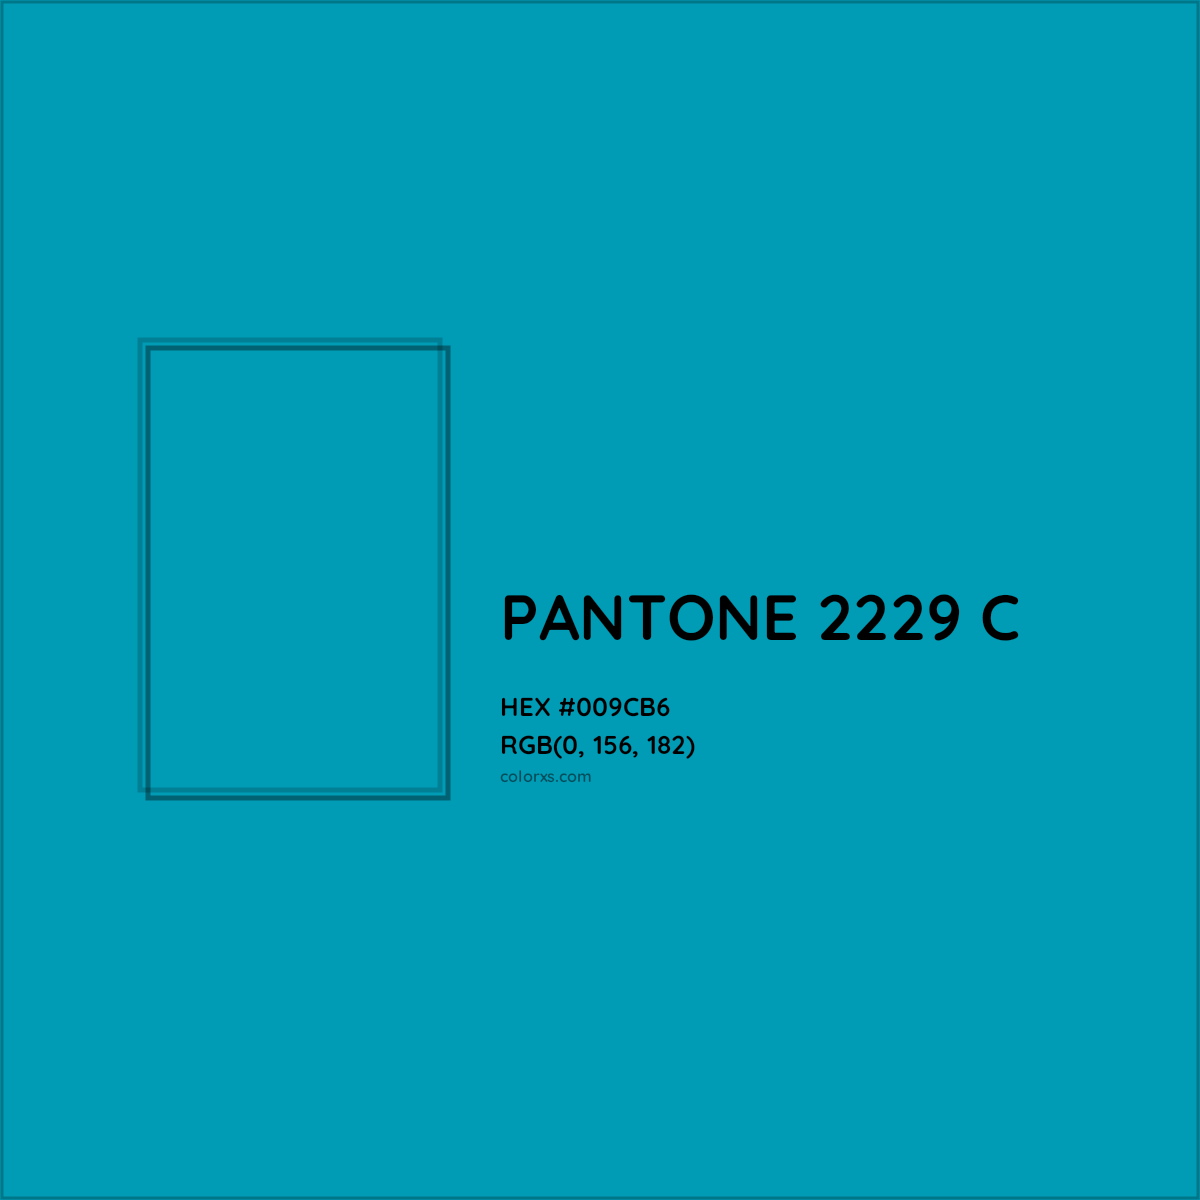 HEX #009CB6 PANTONE 2229 C CMS Pantone PMS - Color Code